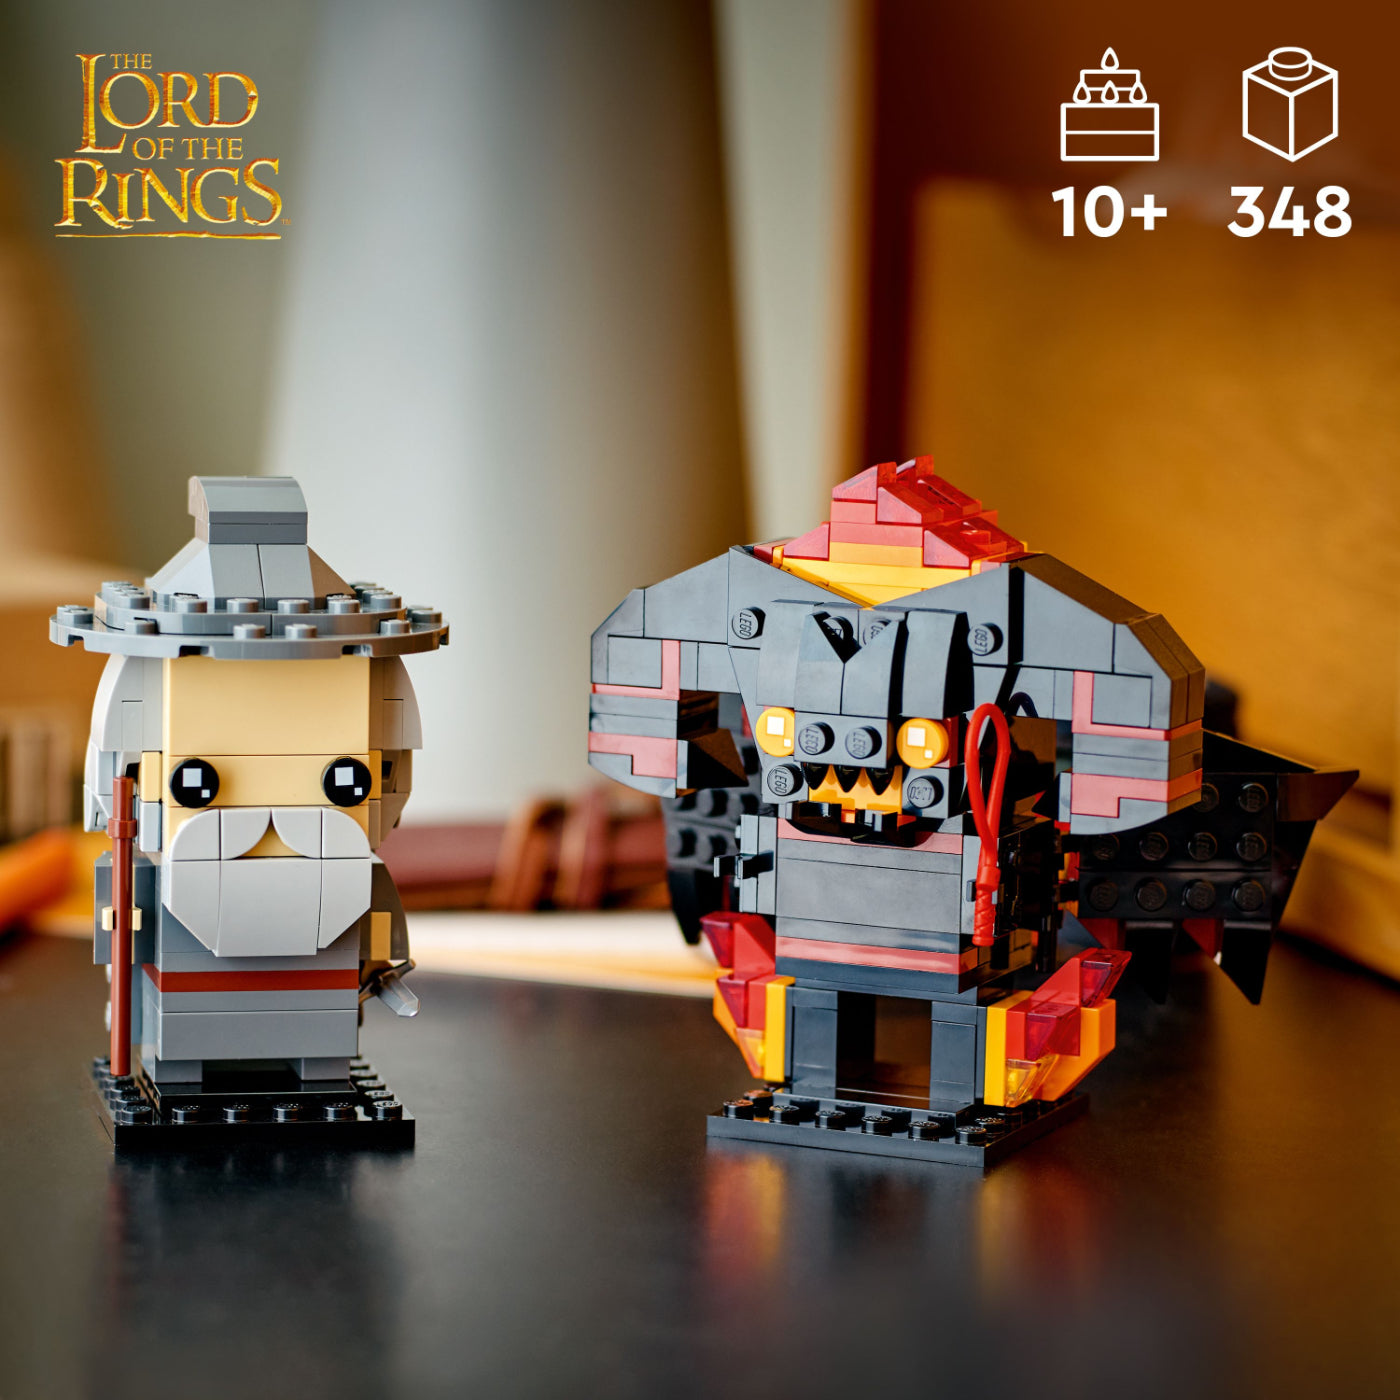 LEGO® BrickHeadz™ Gandalf the Grey™ & Balrog™ (40631)